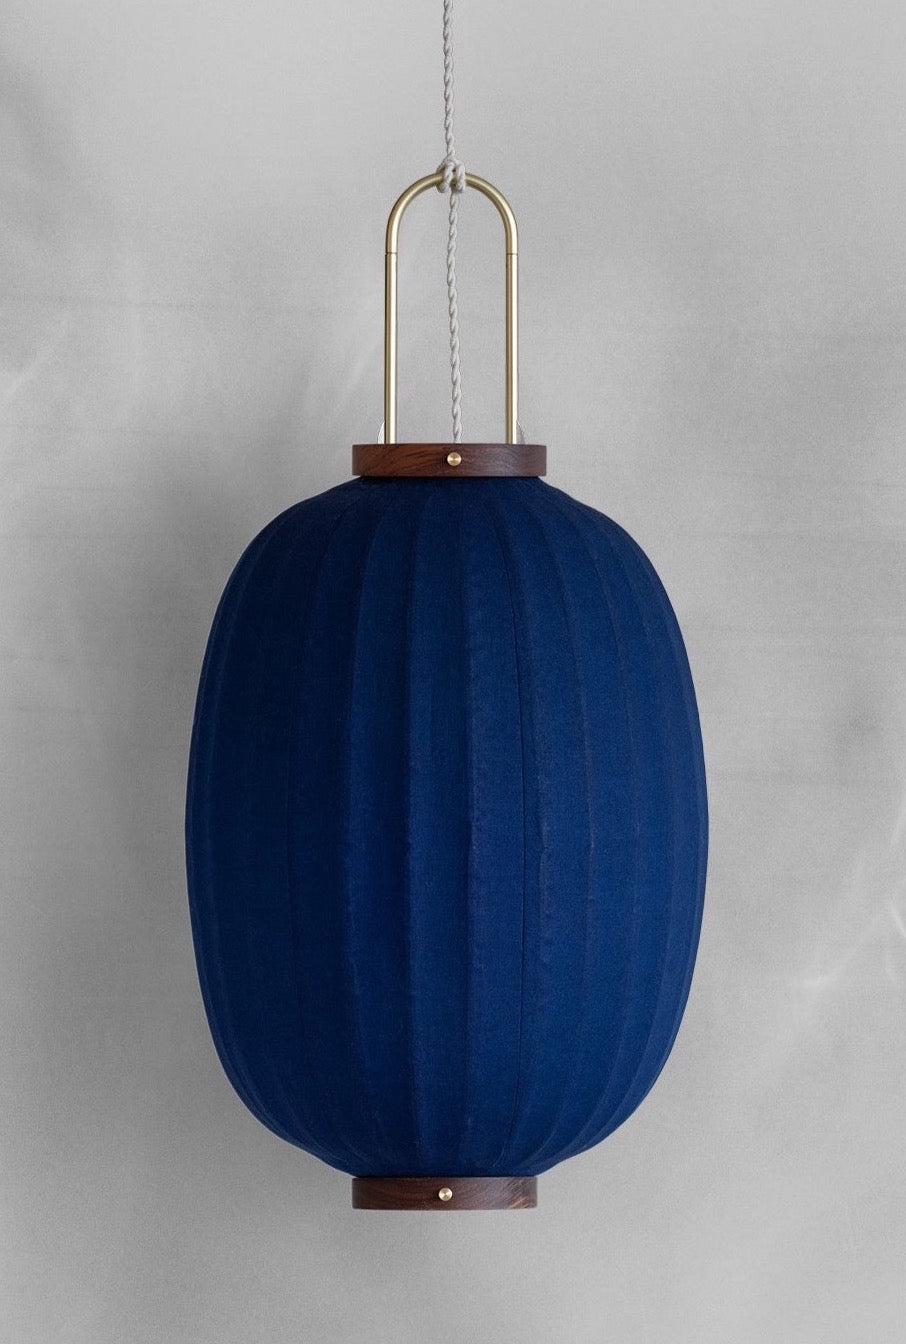 The Oval shape Plant Dyed Lantern Blue by Taiwan Lantern.